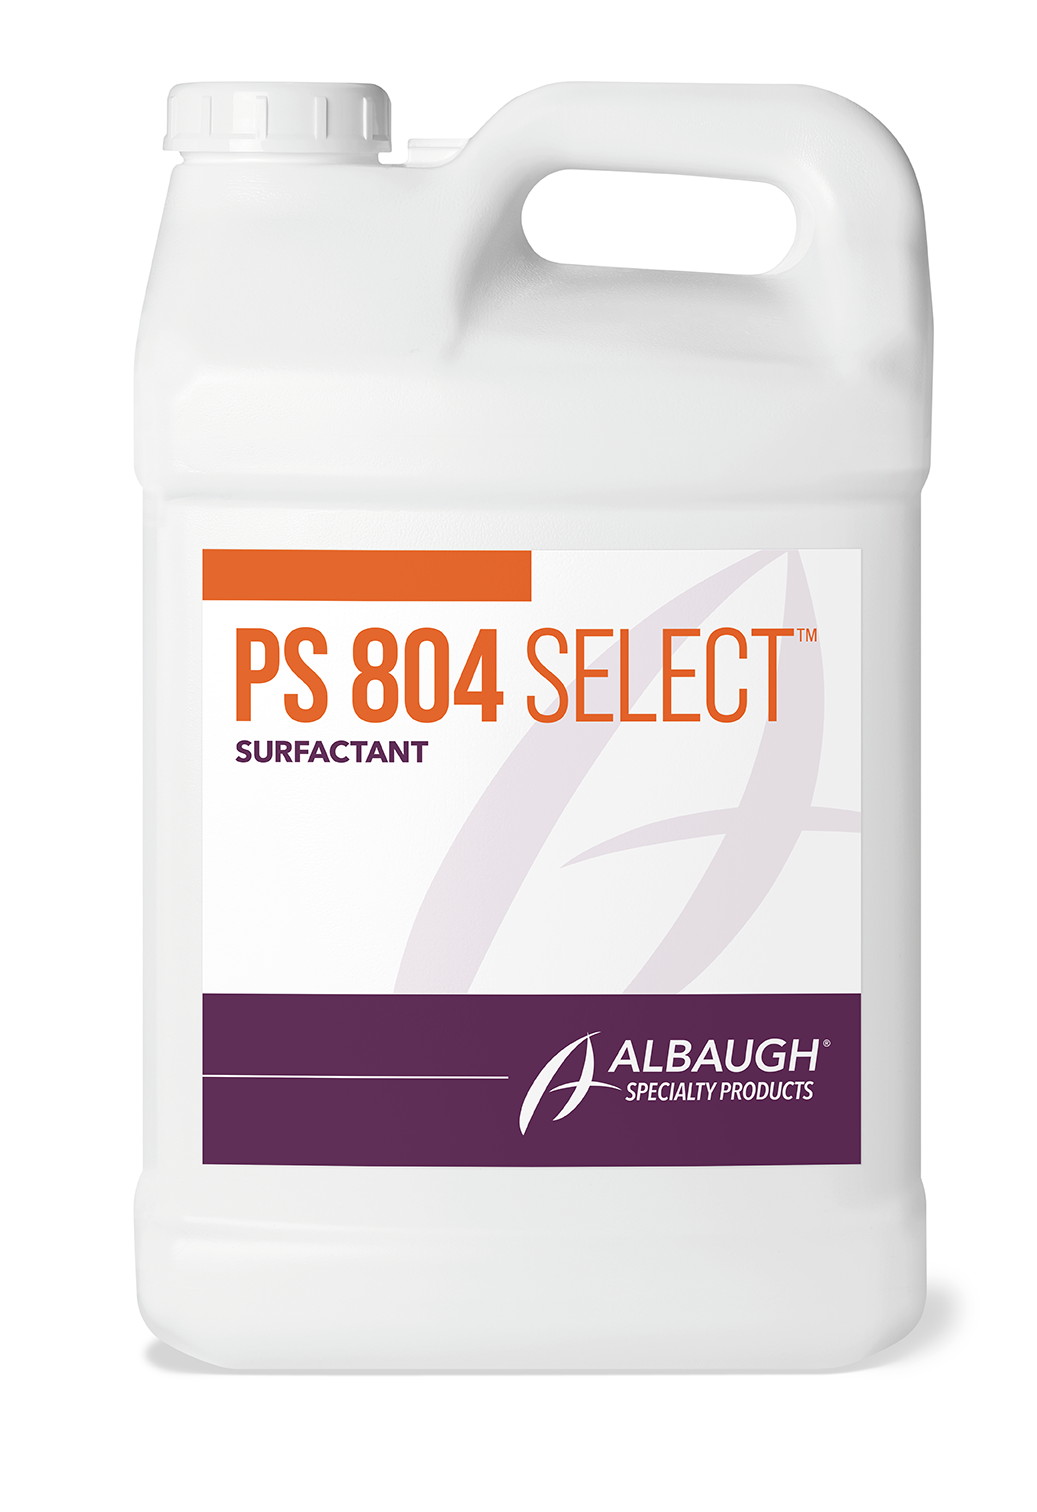 PS 804 Select™